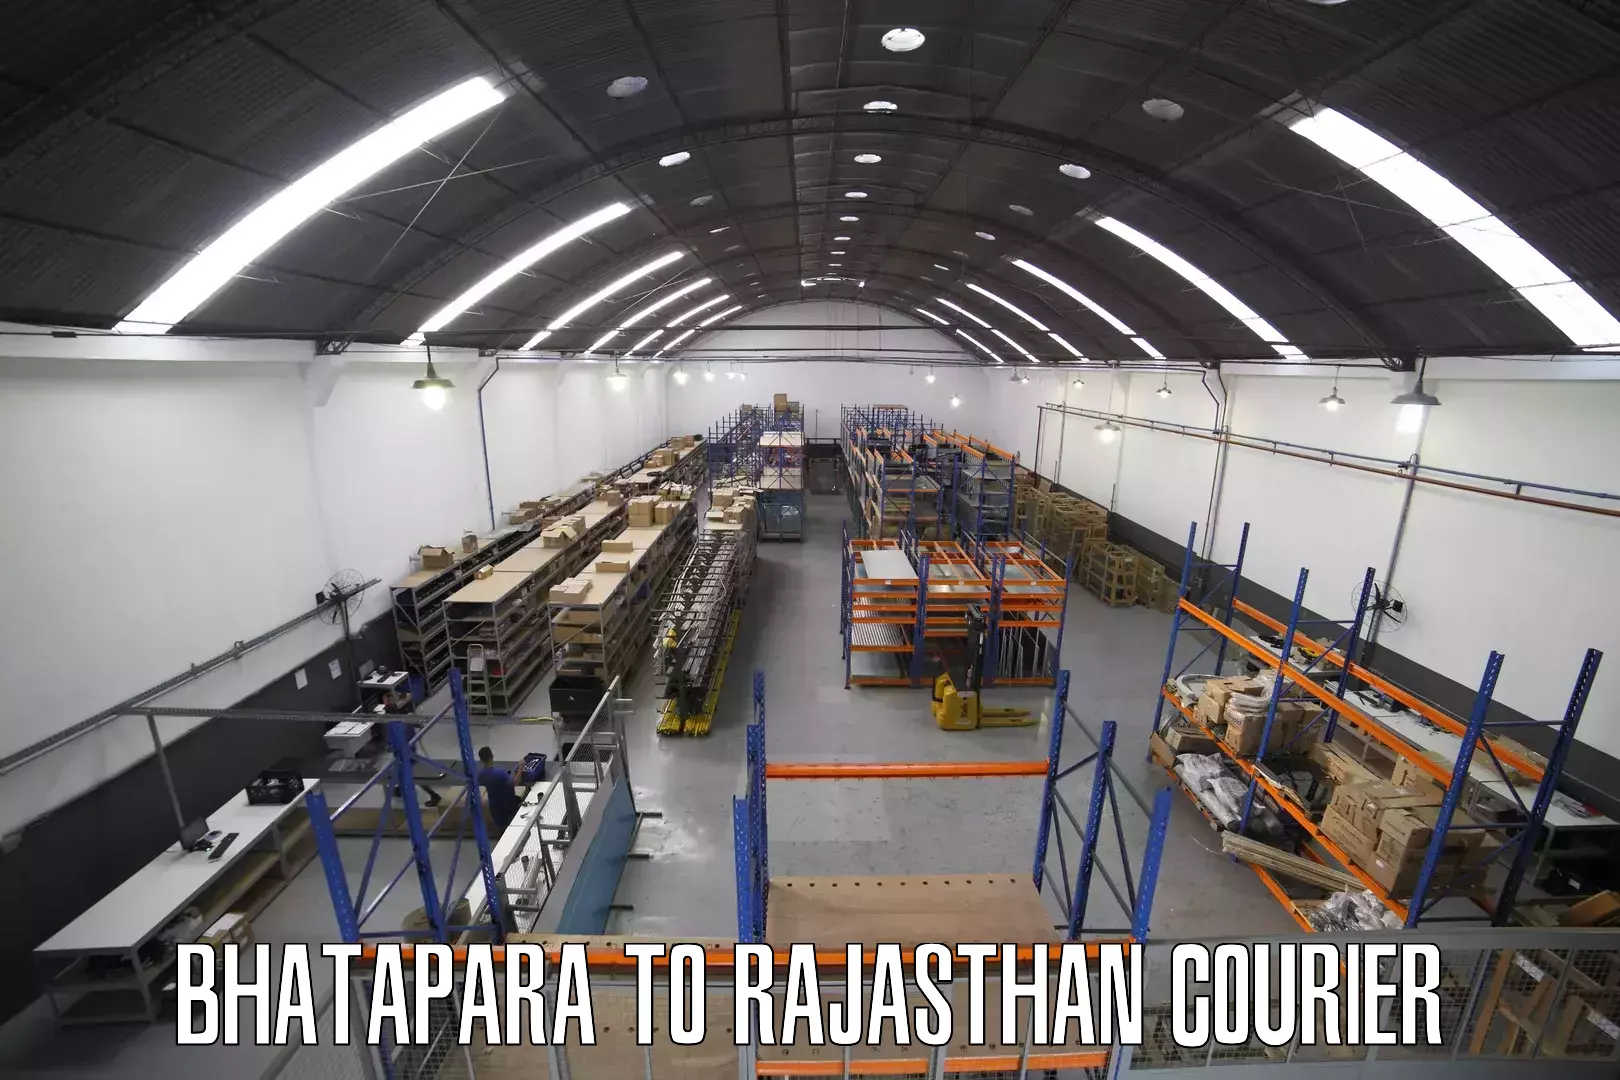 Expedited shipping methods Bhatapara to Raila